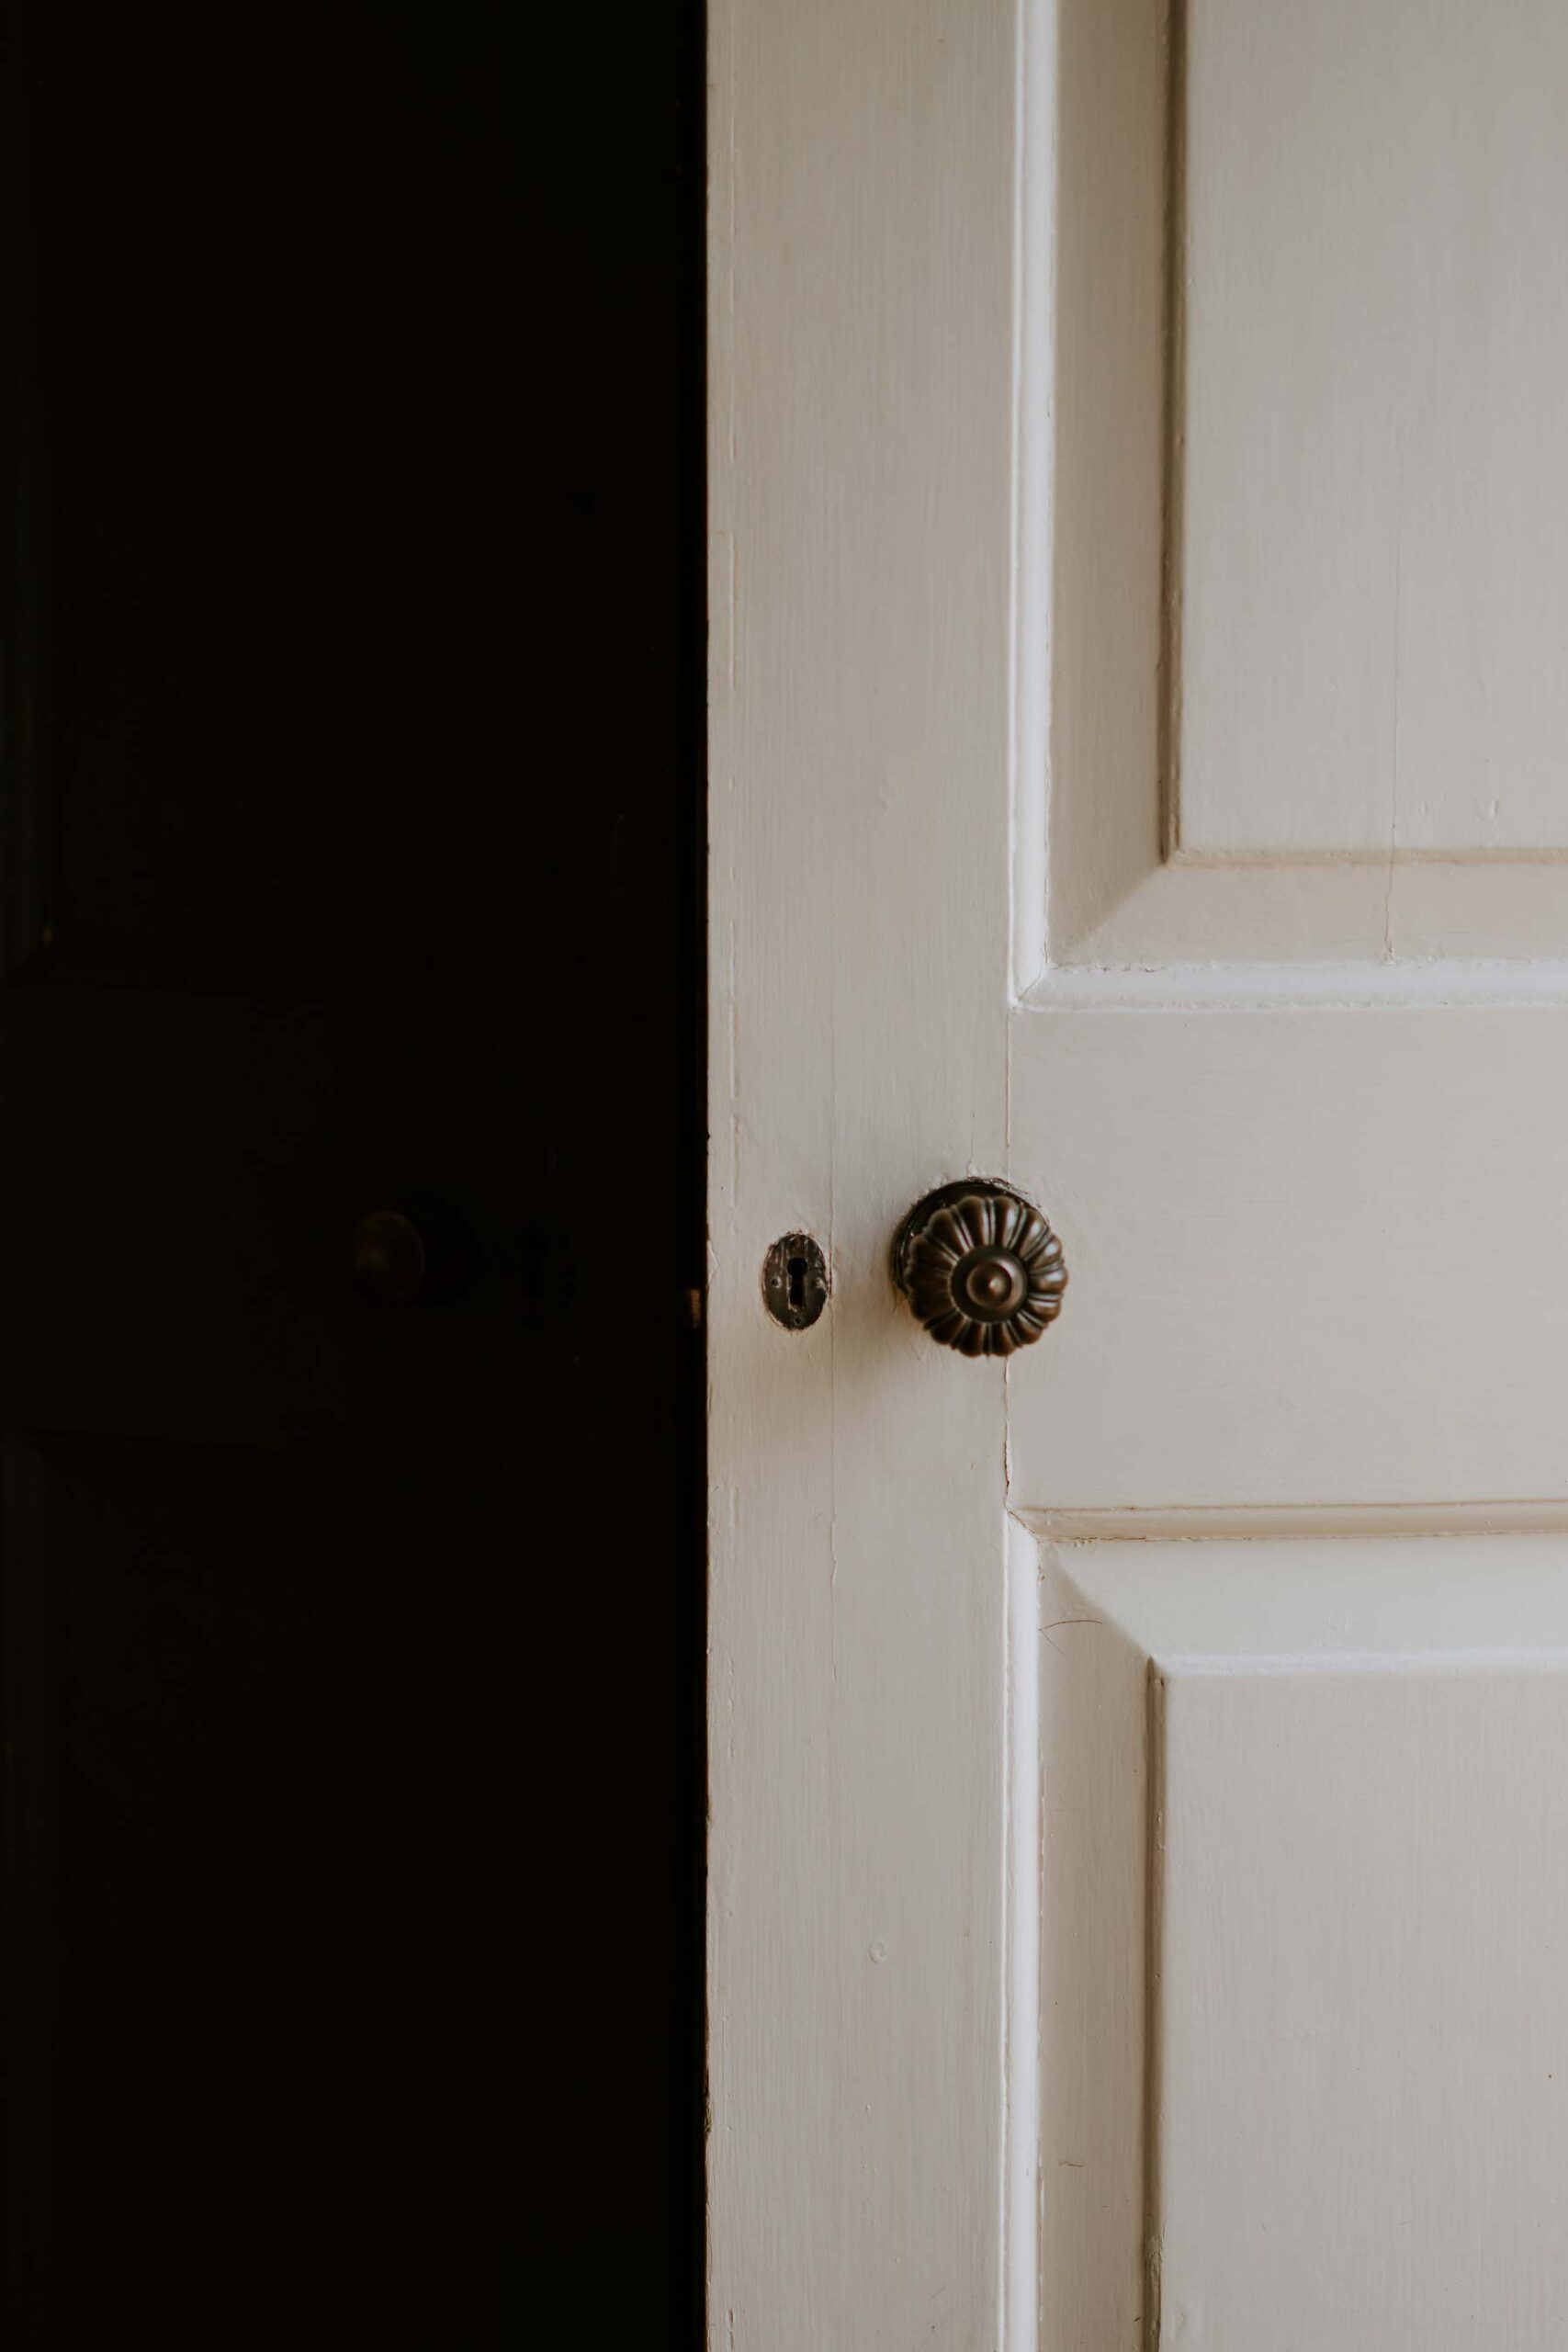 Doors…Or Thresholds